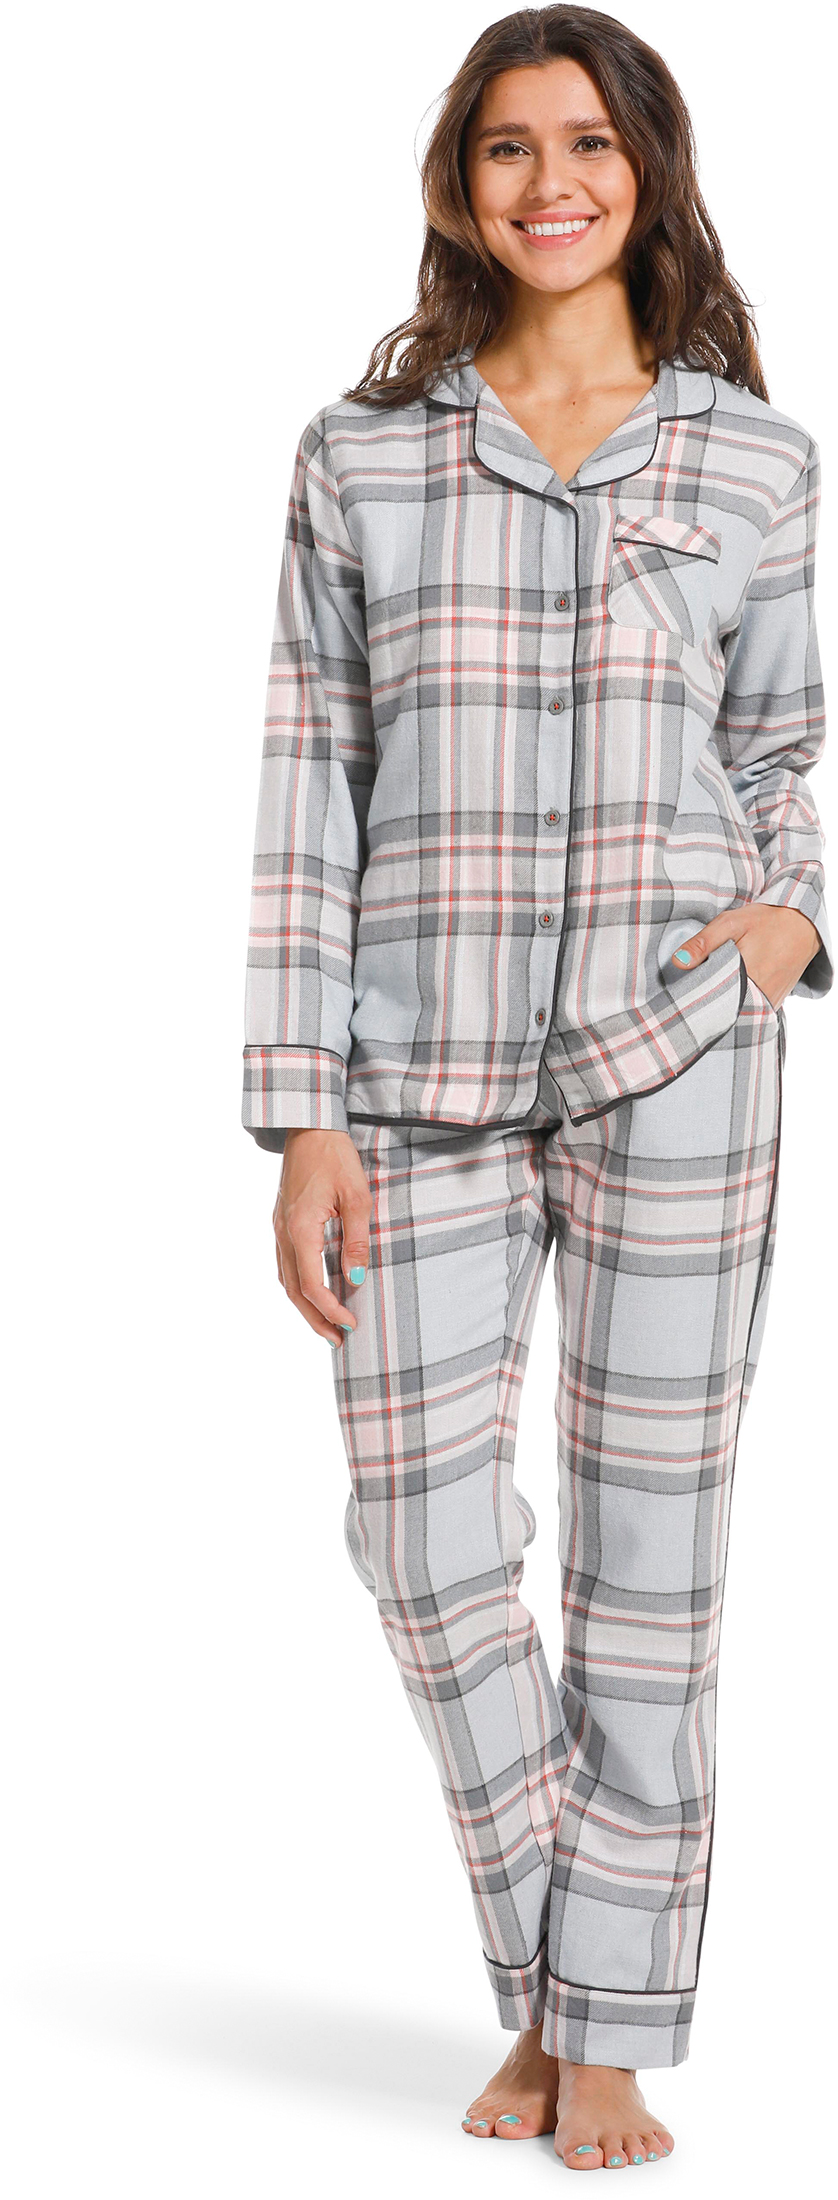 Rebelle dames pyjama flanel 21222-458-6 - Beige - 46